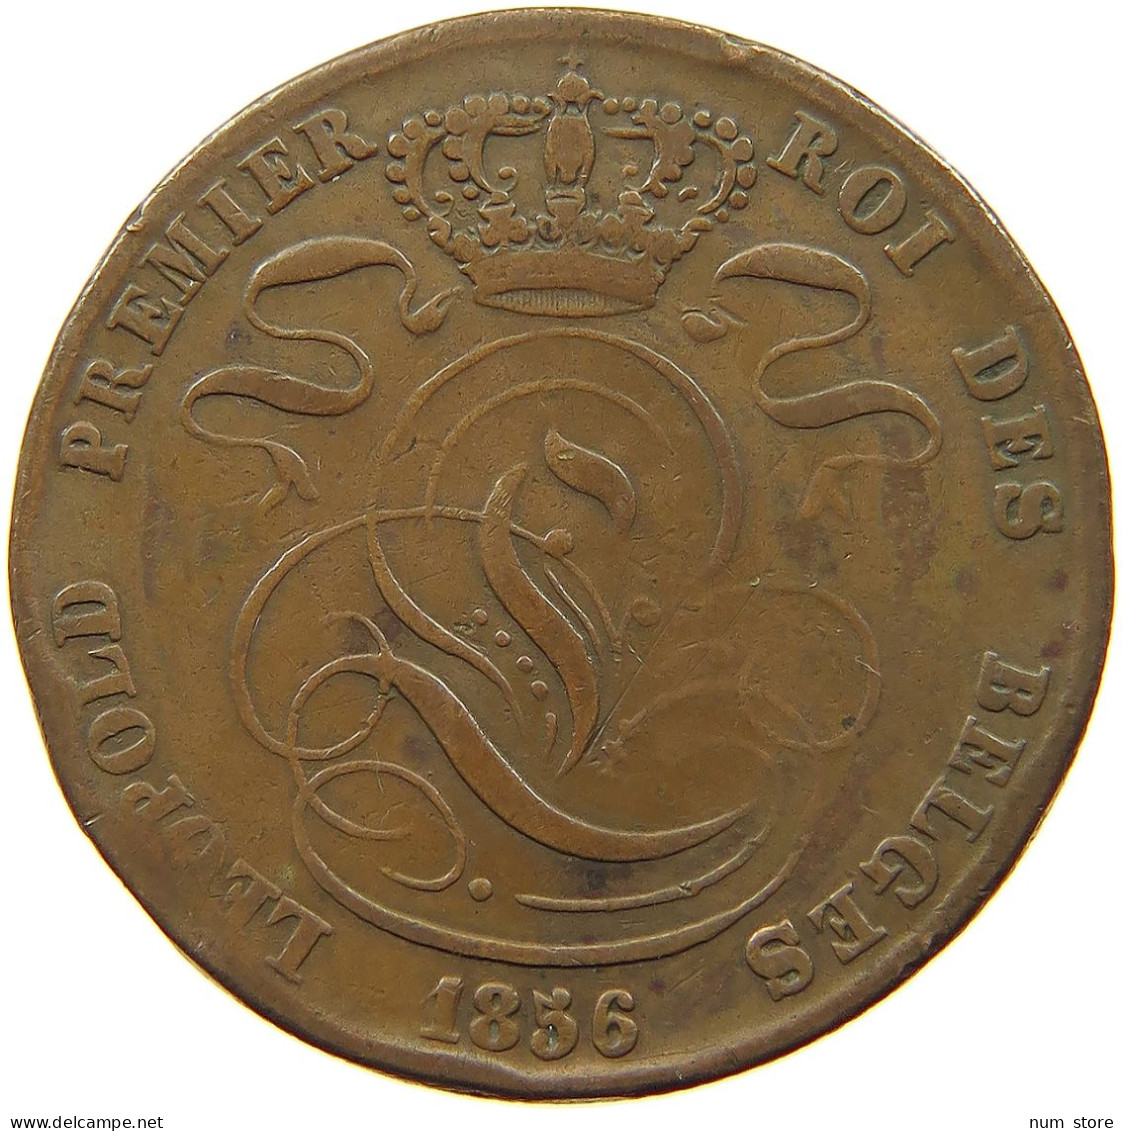 BELGIUM 5 CENTIMES 1856 Leopold I. (1831-1865) #a007 0317 - 5 Cents